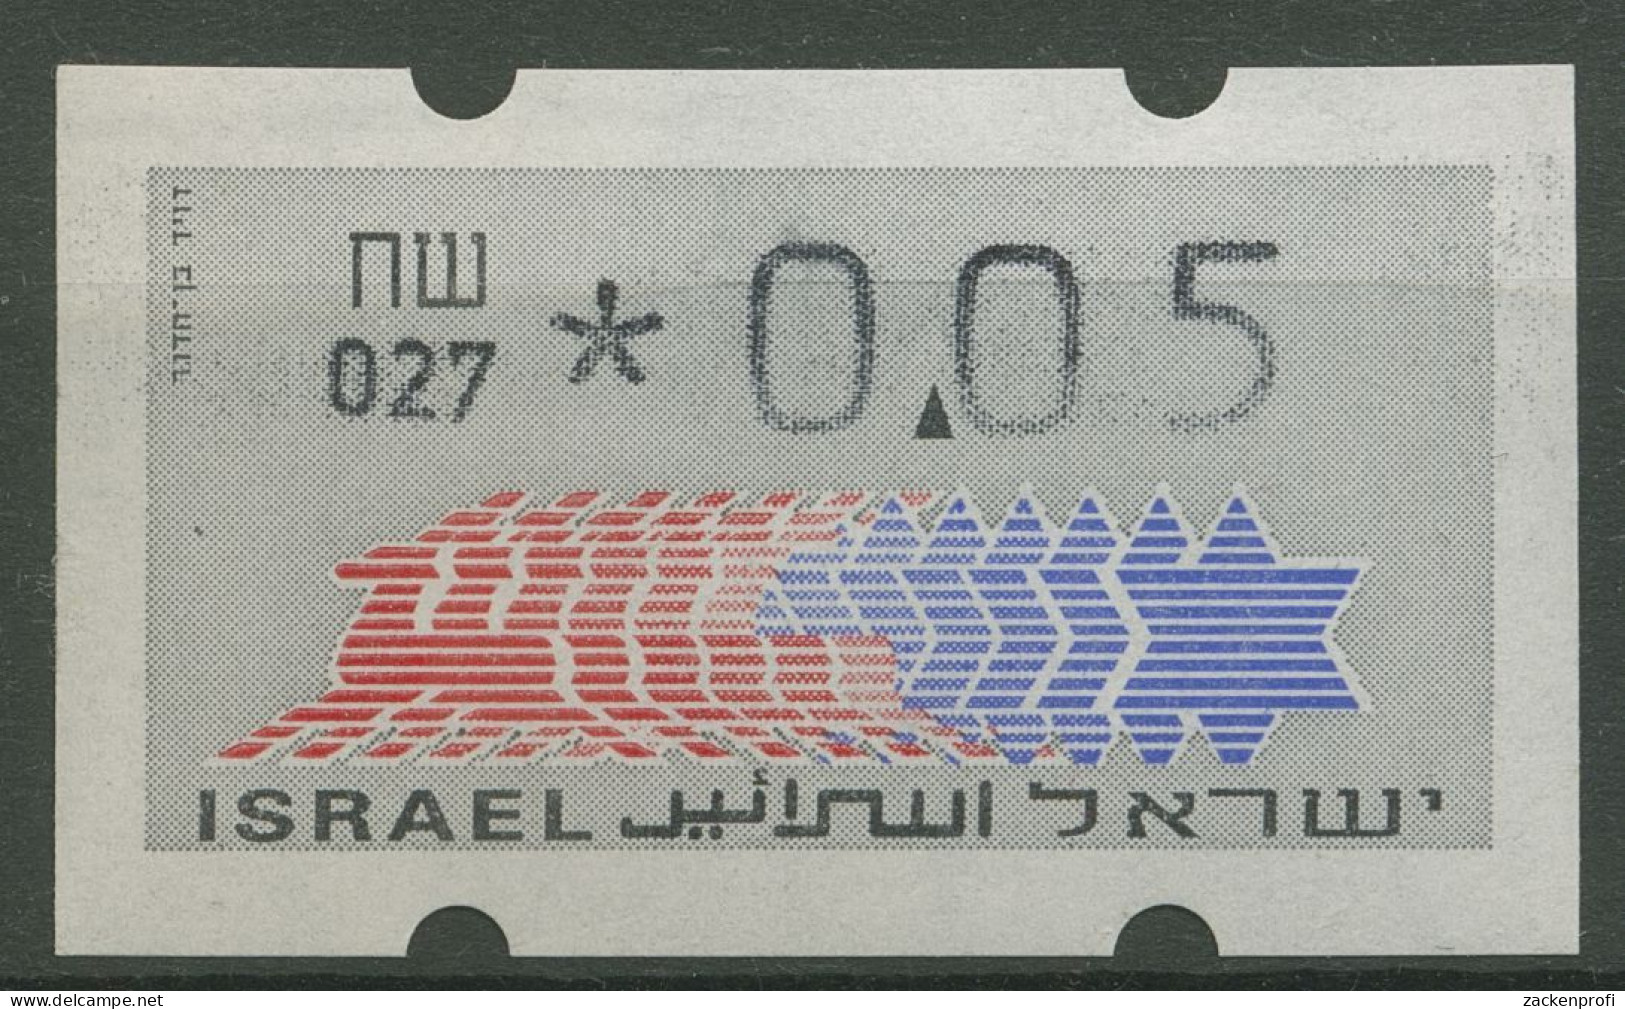 Israel ATM 1990 Hirsch Automat 027 Einzelwert ATM 3.3.27 Postfrisch - Vignettes D'affranchissement (Frama)